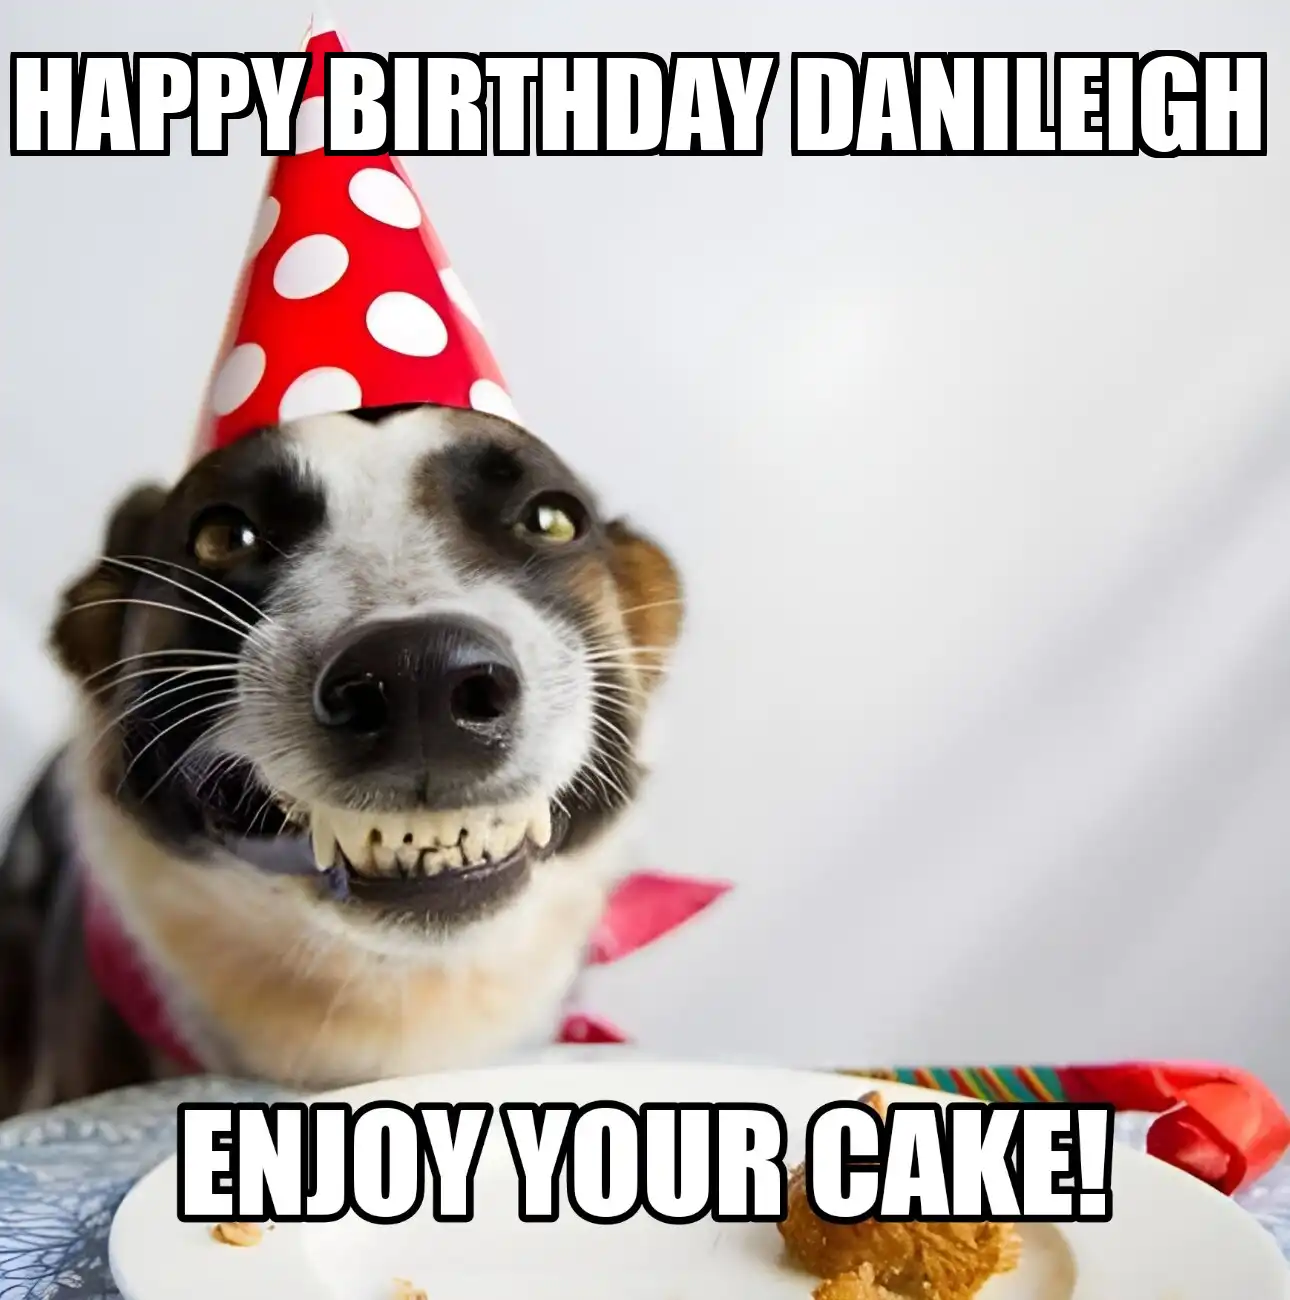 Happy Birthday Danileigh Enjoy Your Cake Dog Meme